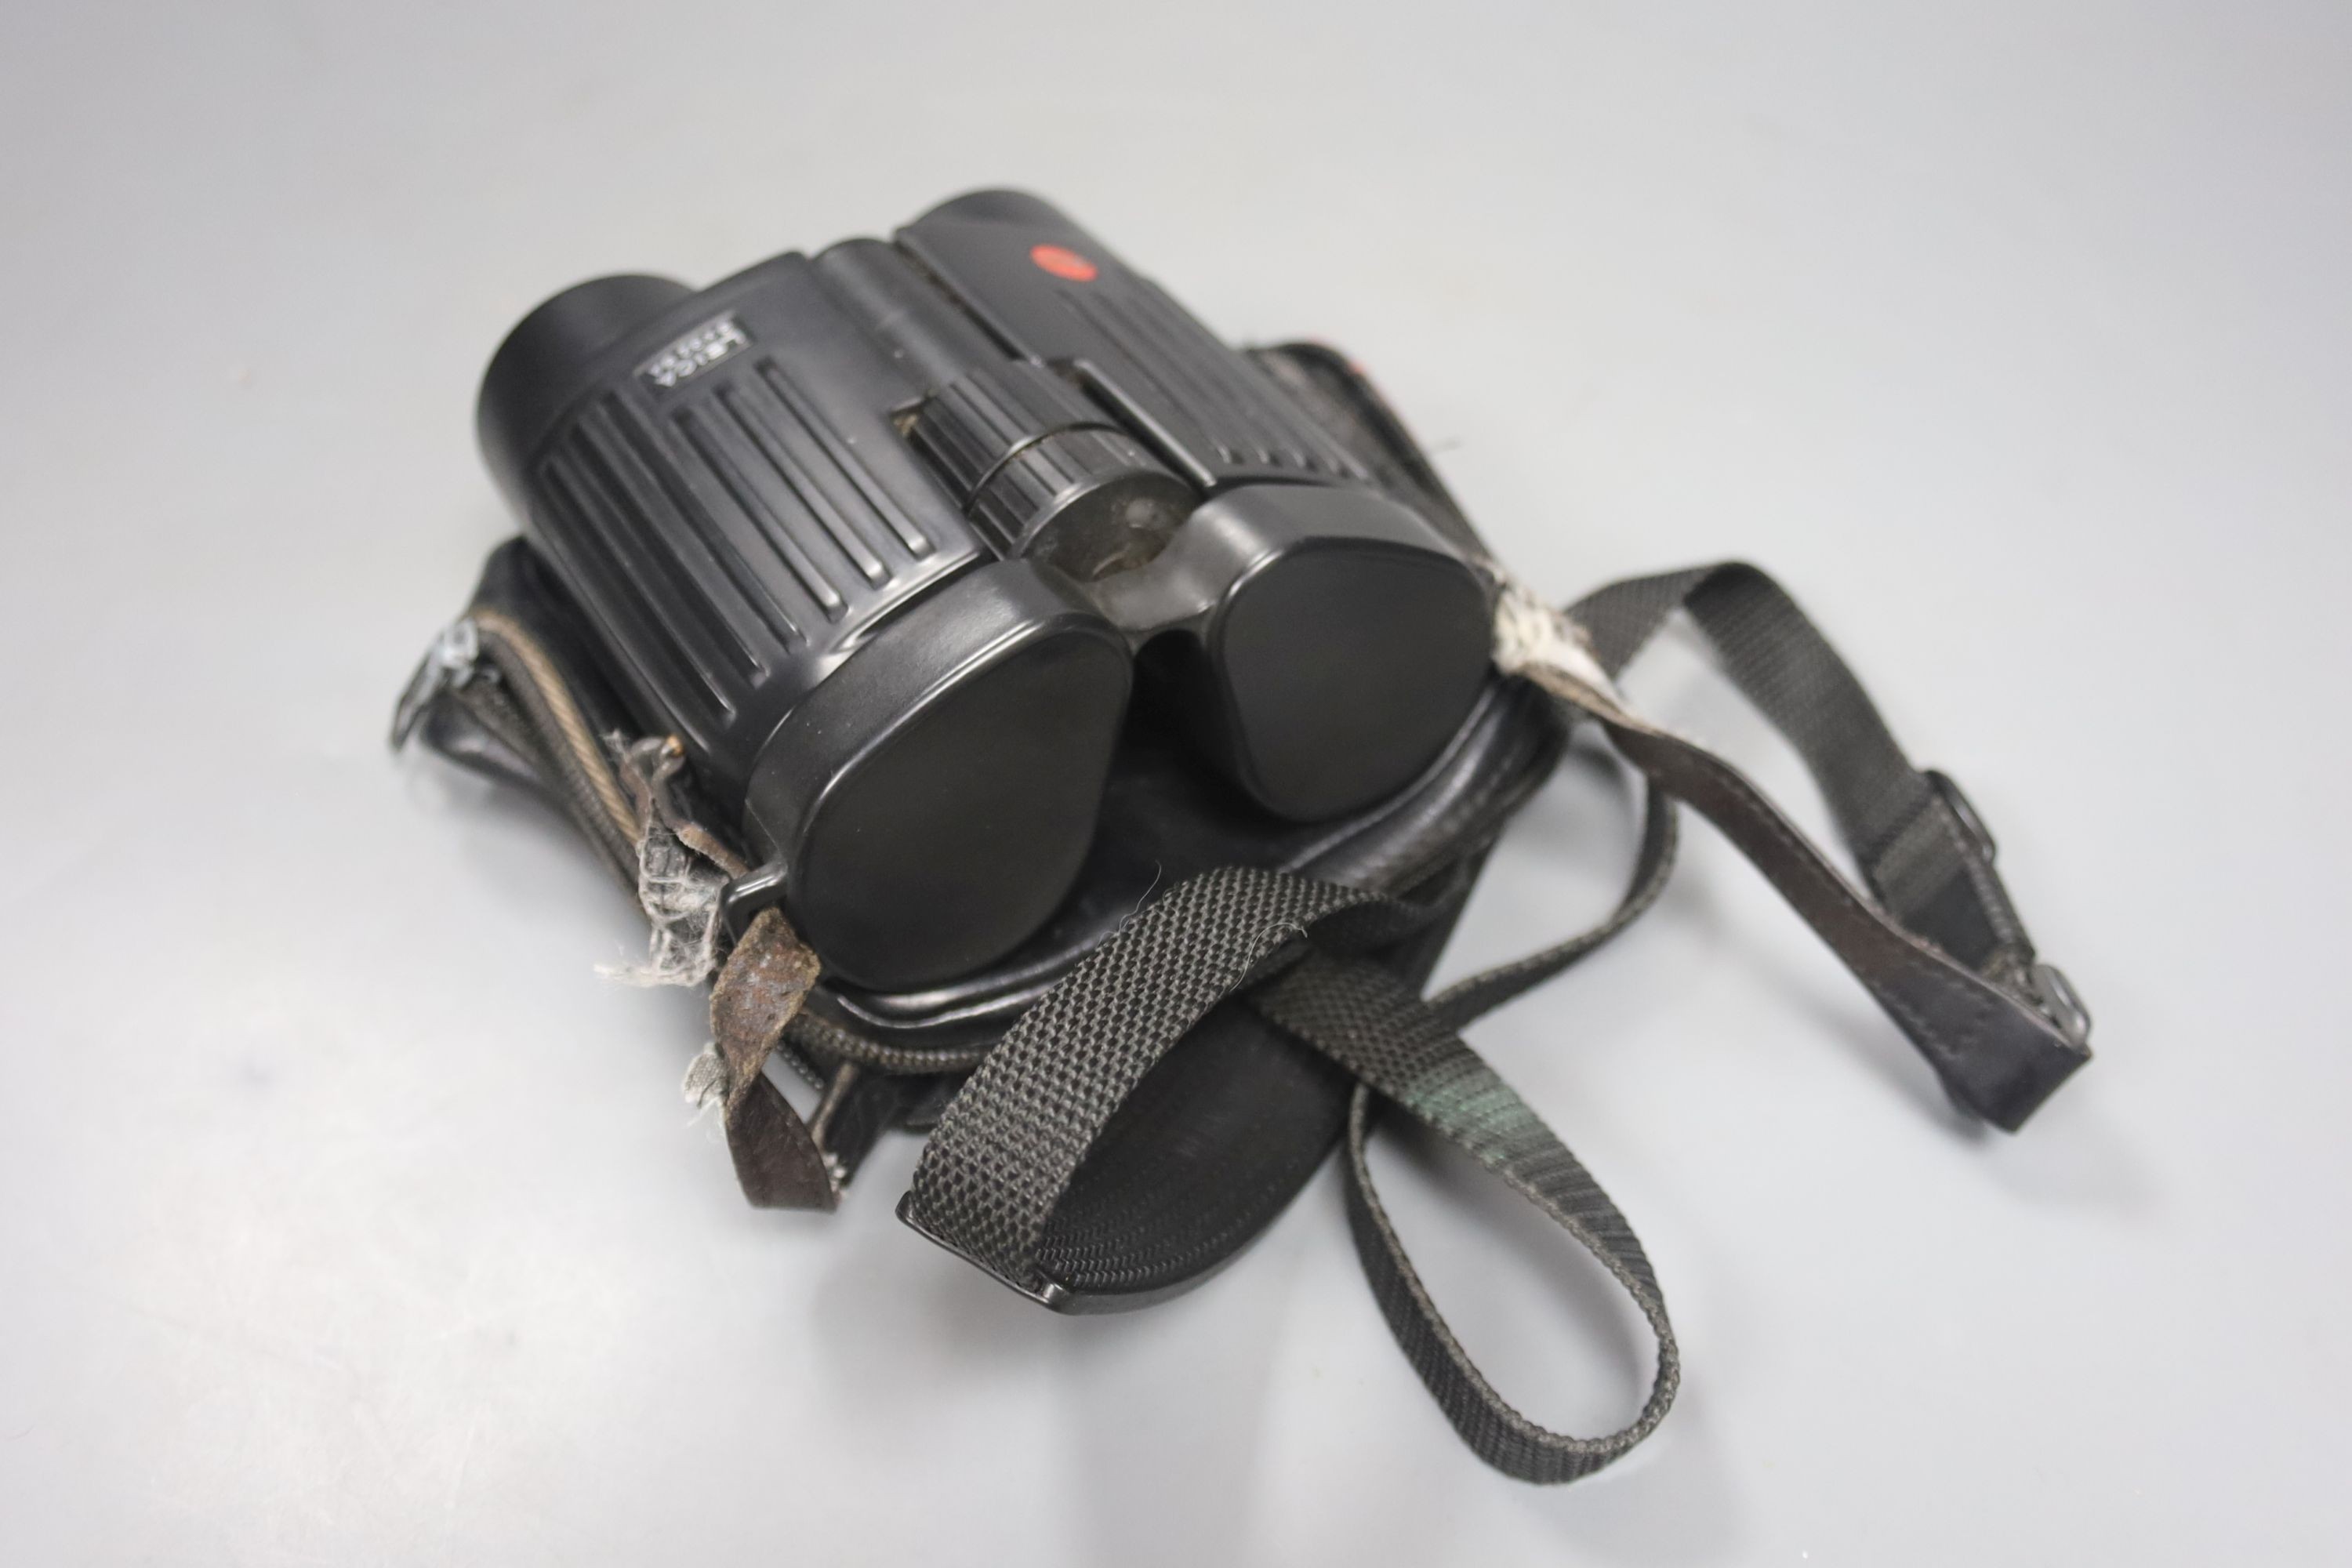 Leica 8x32 BA folding binoculars in fitted case